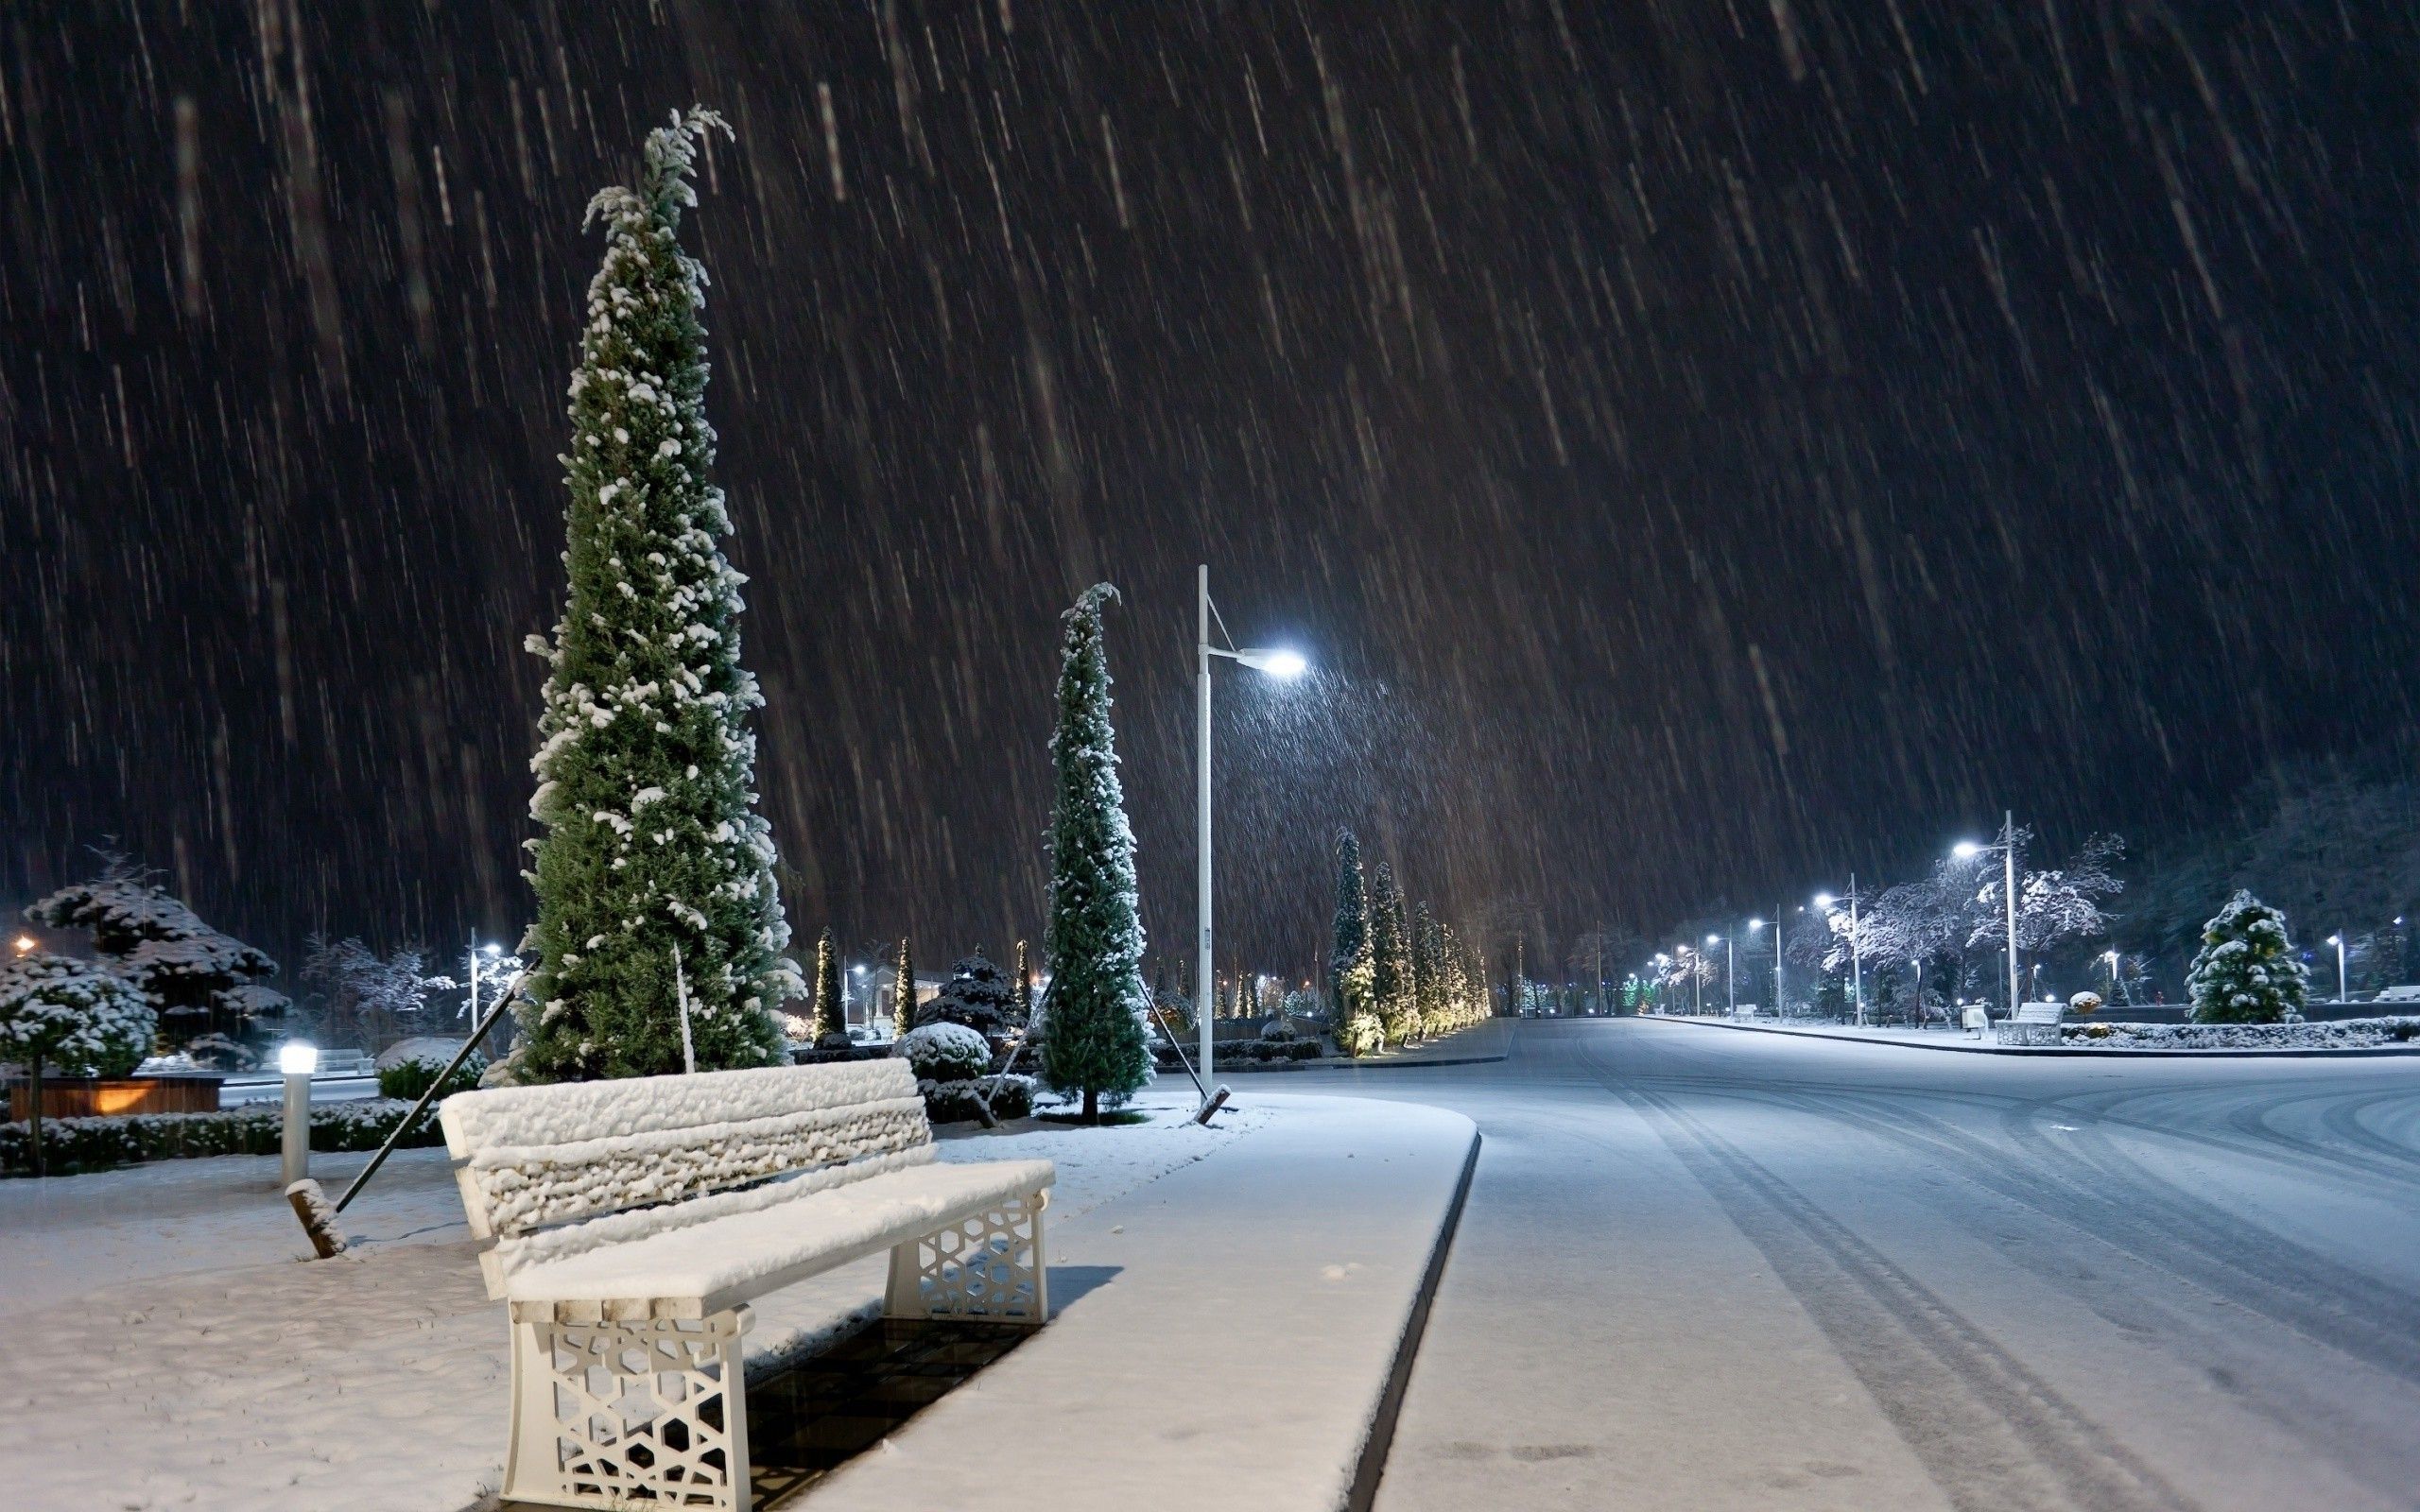 Snow night on a city street. Snow night, Night photo, City streets